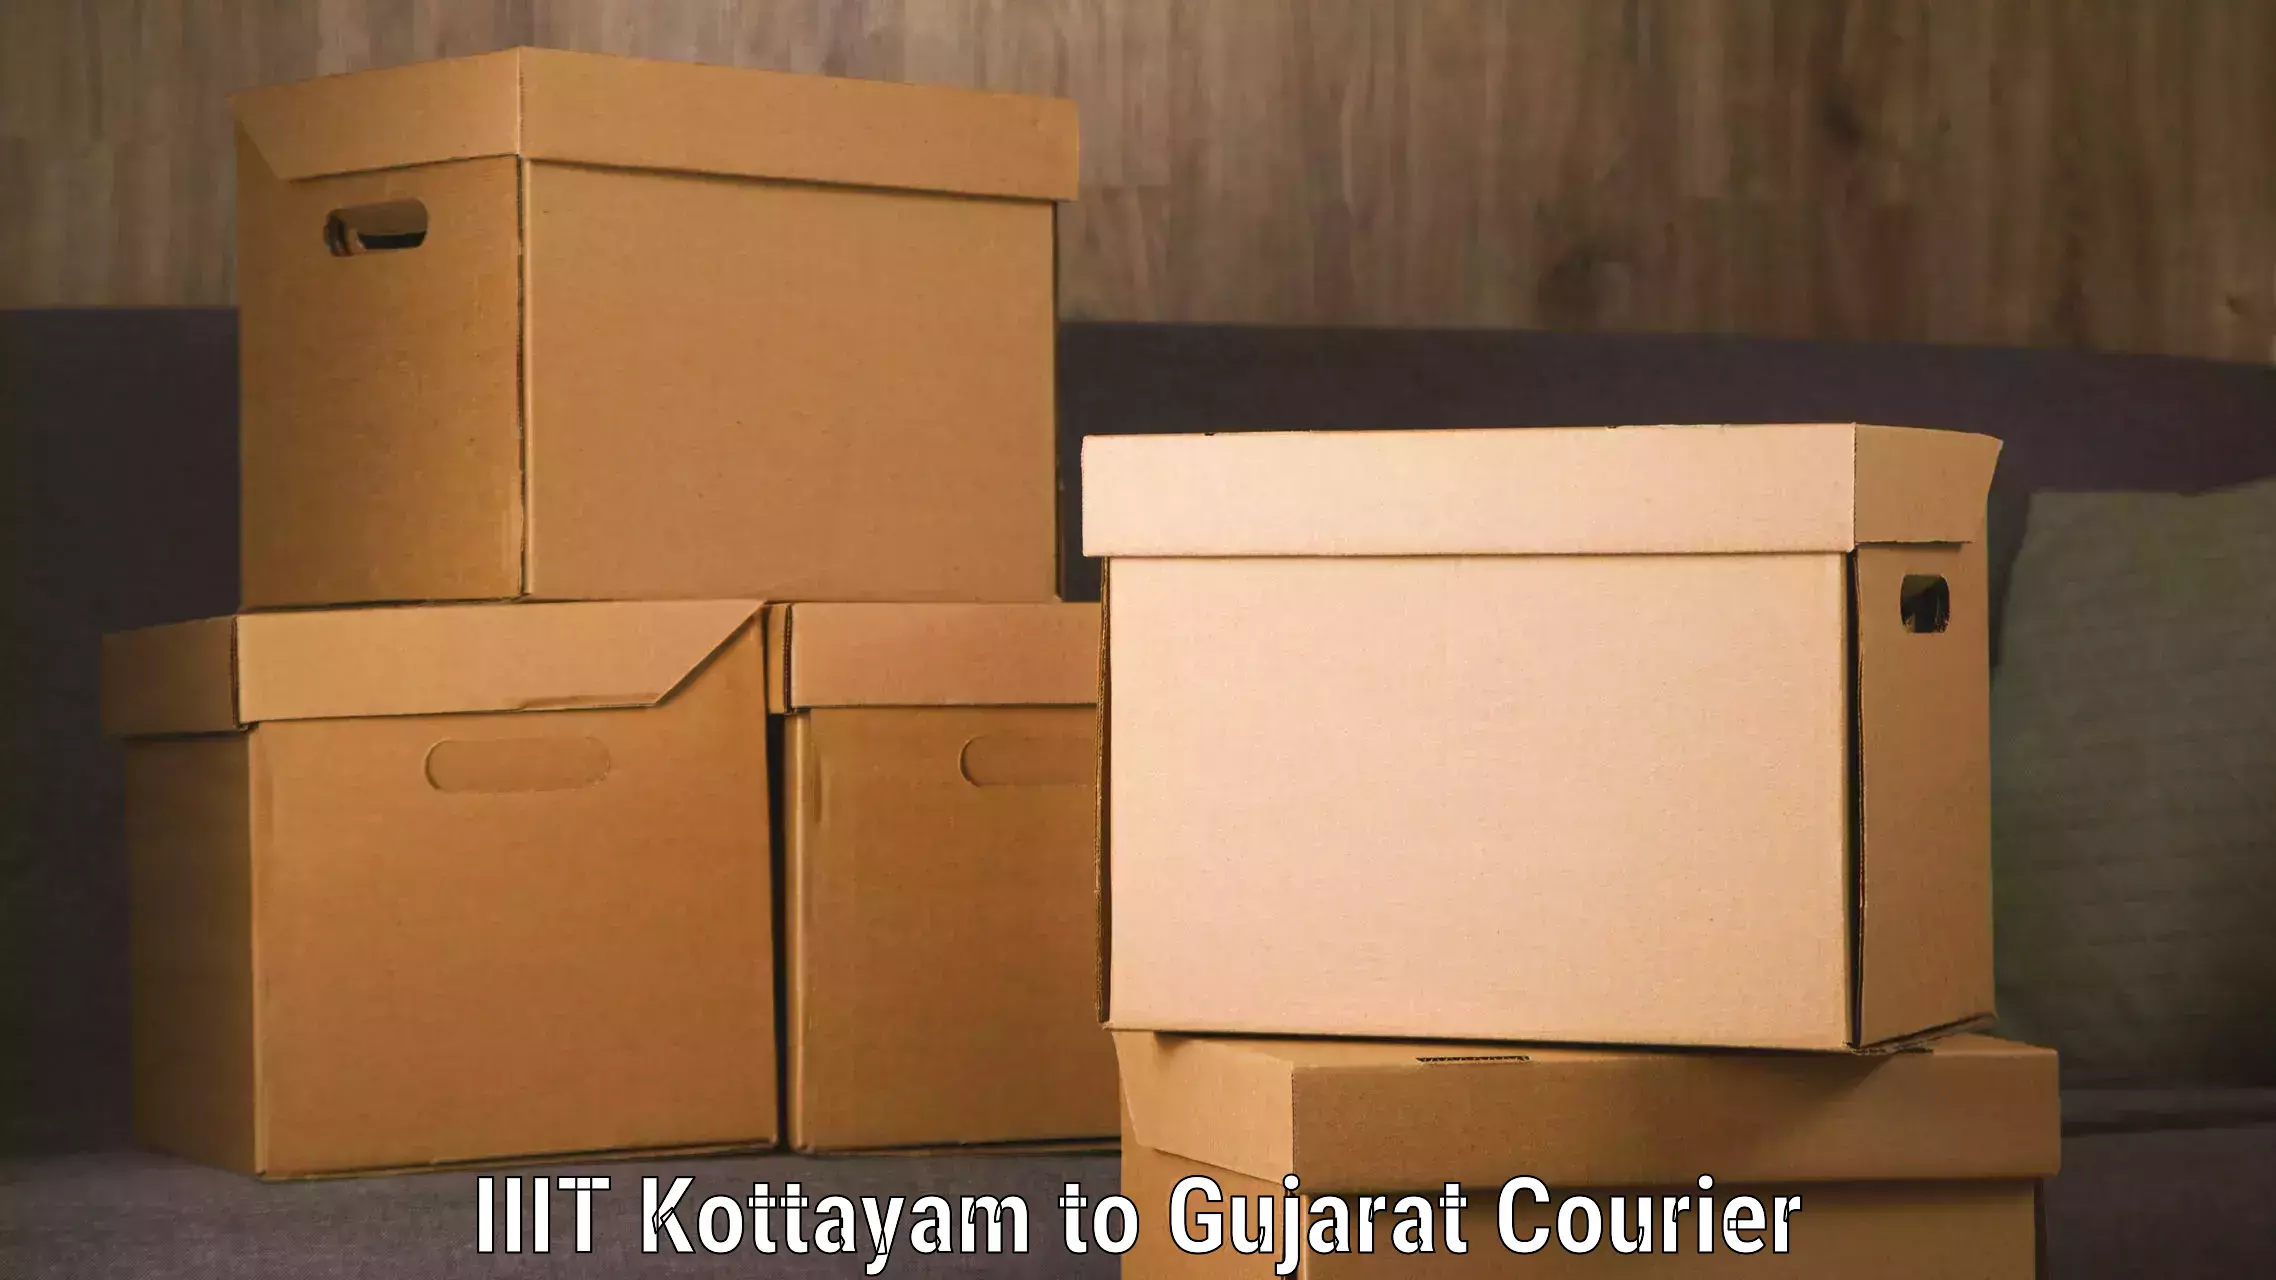 Courier service comparison IIIT Kottayam to Jetpur